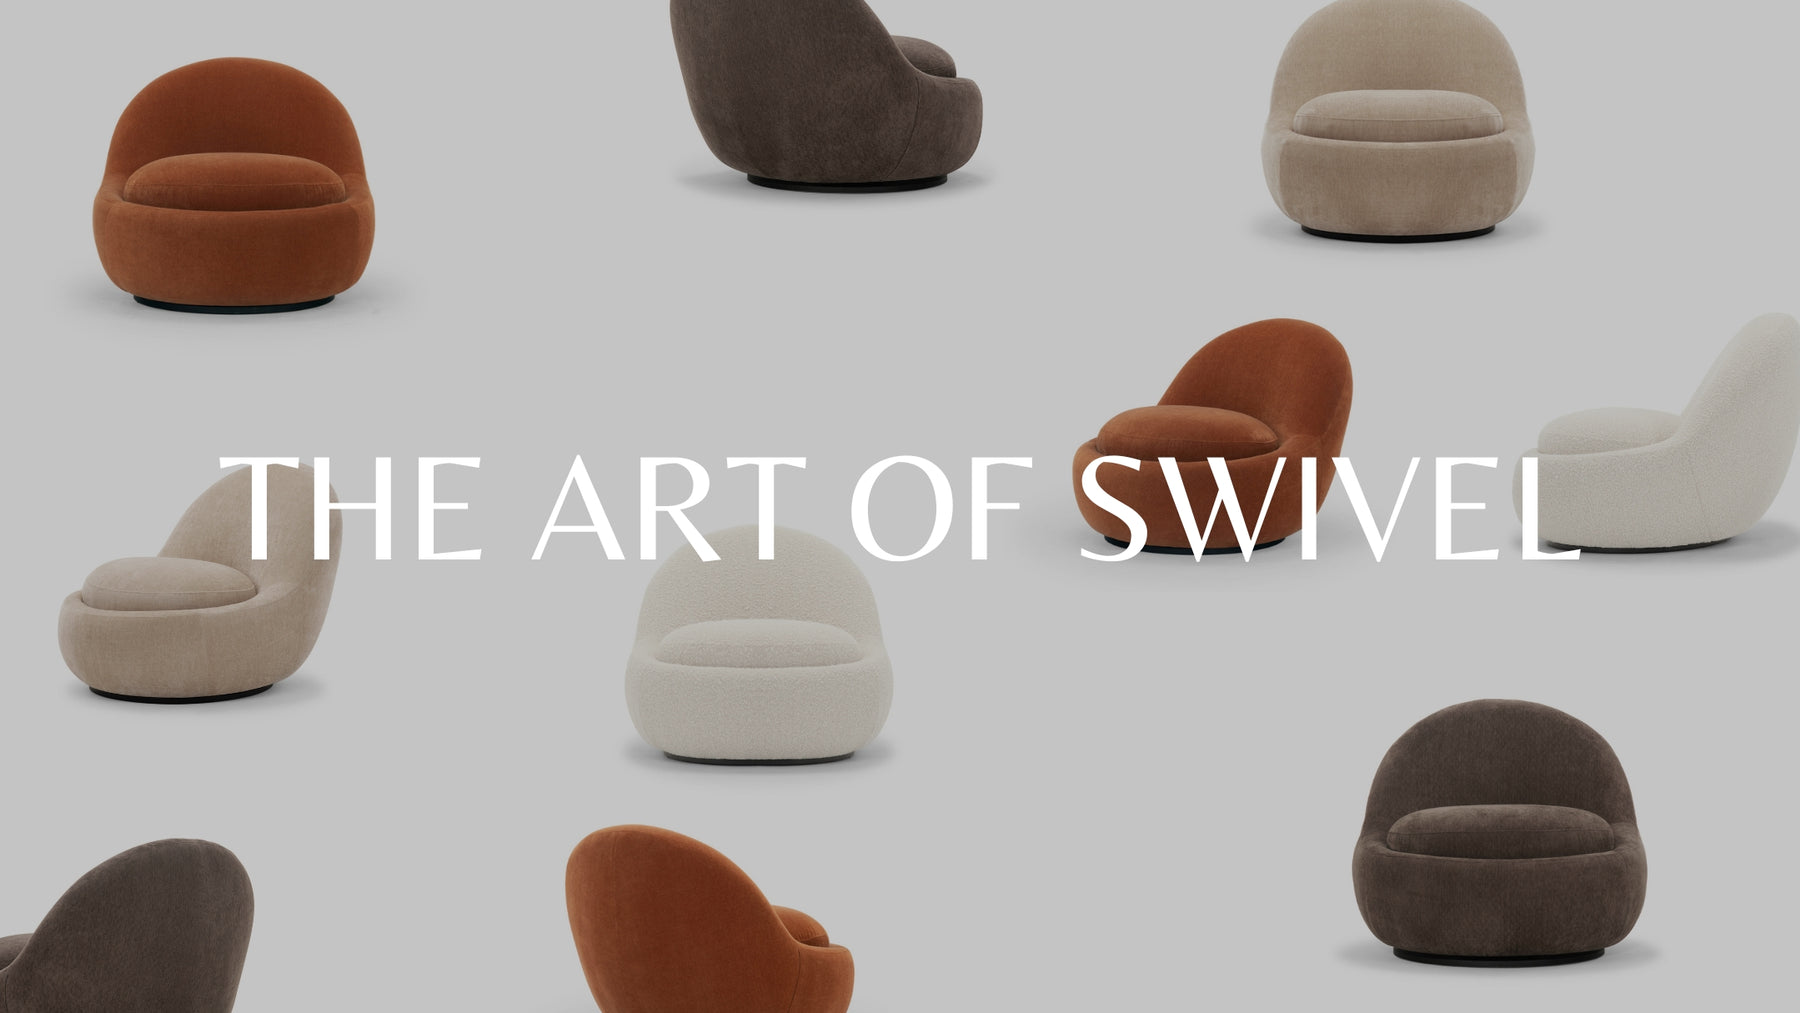 The Art of Swivel